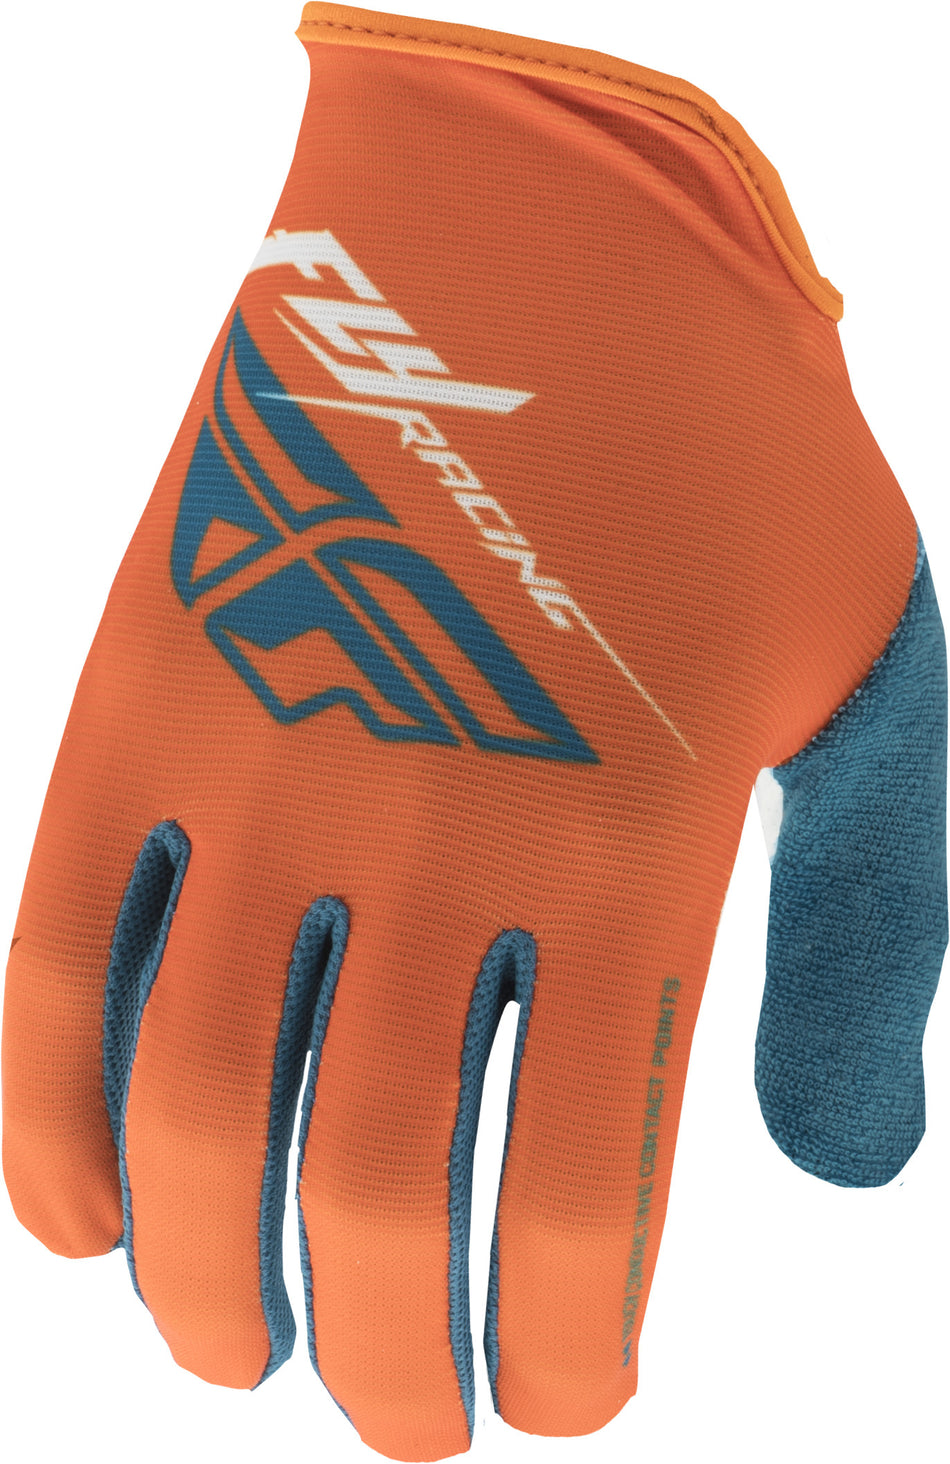 FLY RACING Media Gloves Orange/Teal/White Sz 10 350-09810